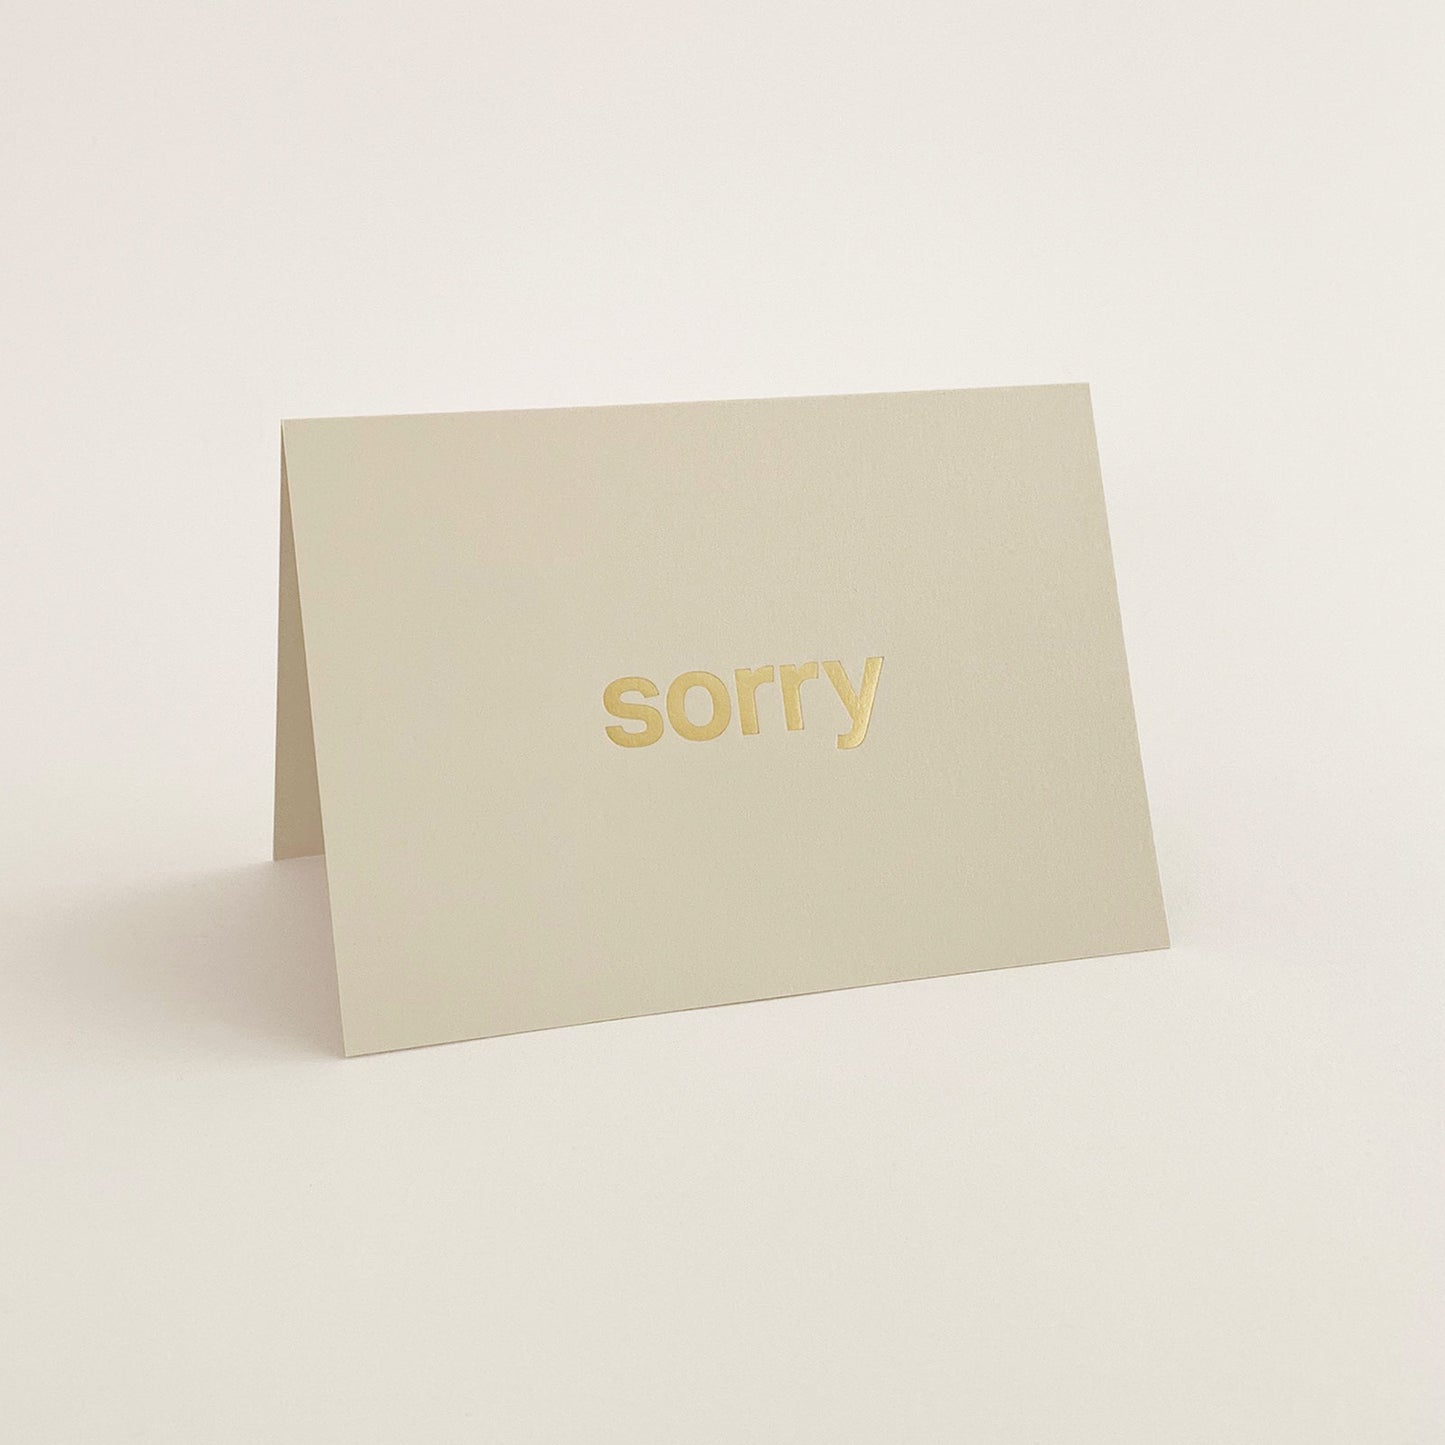 Sorry Card Brass & Mist